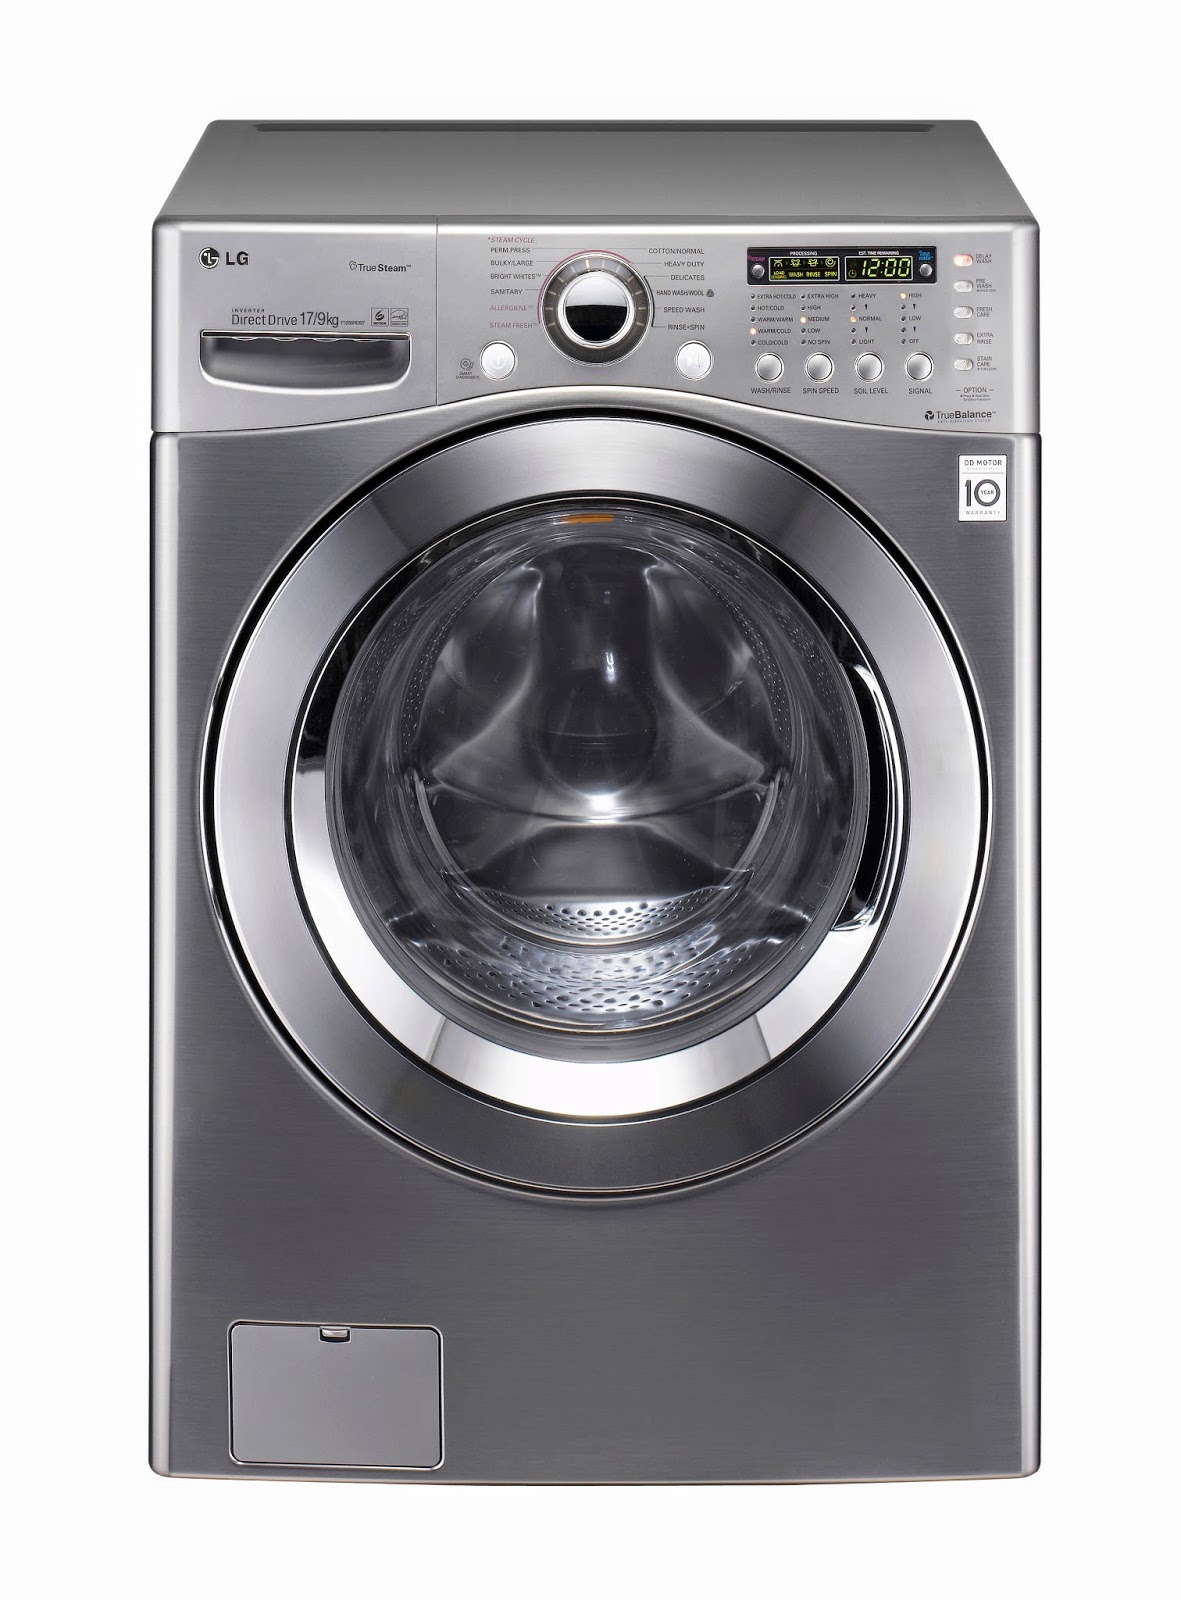 Stella Dimoko Korkus.com: LG Front Load Washing Machine Rated Best By